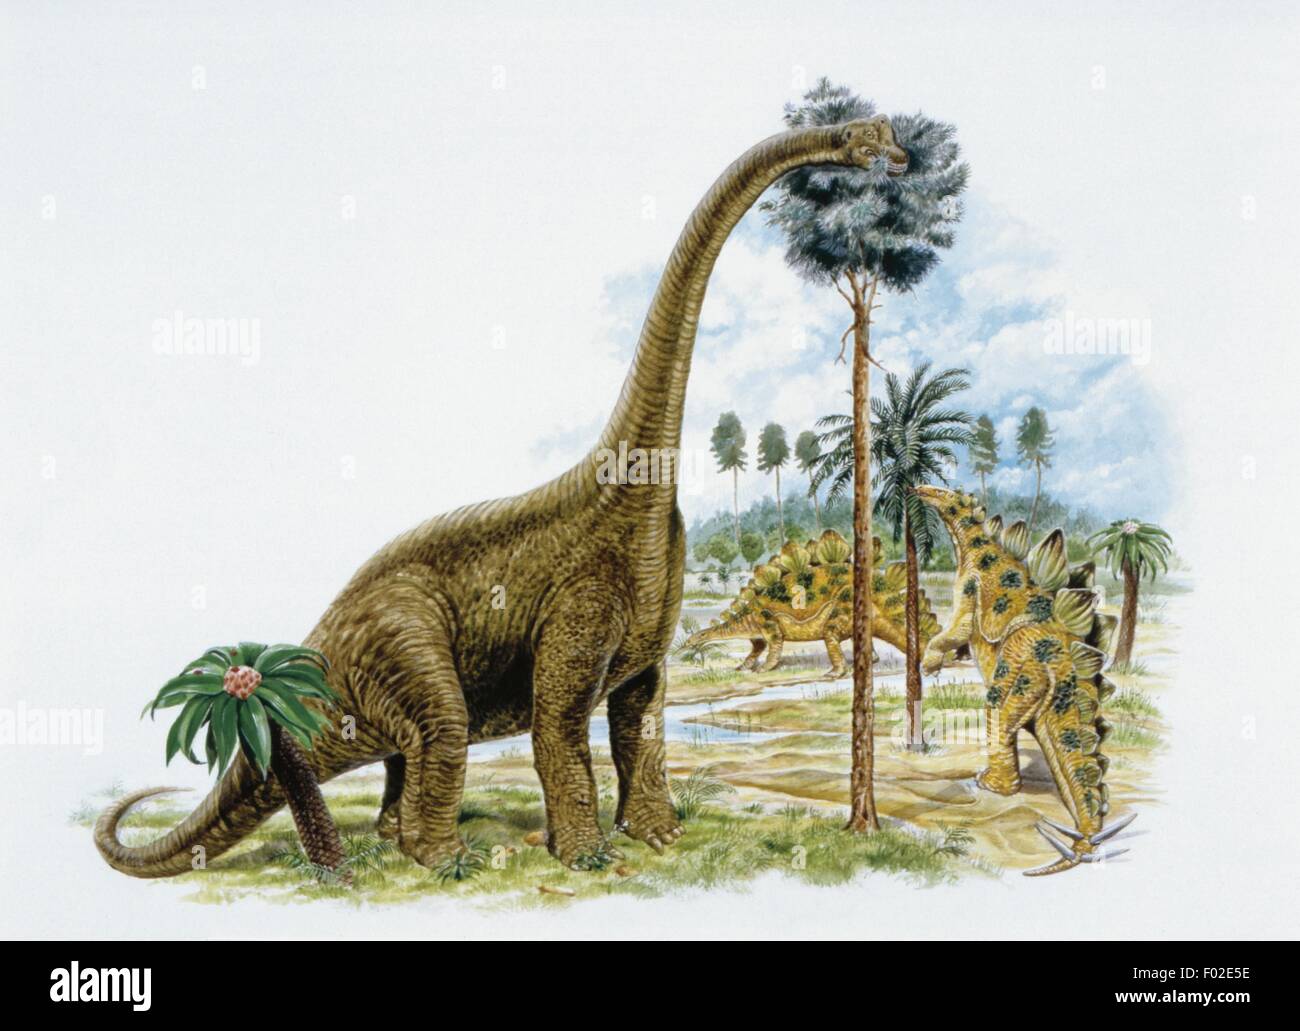 Palaeozoology - Jurassic period - Dinosaurs - Art work Stock Photo